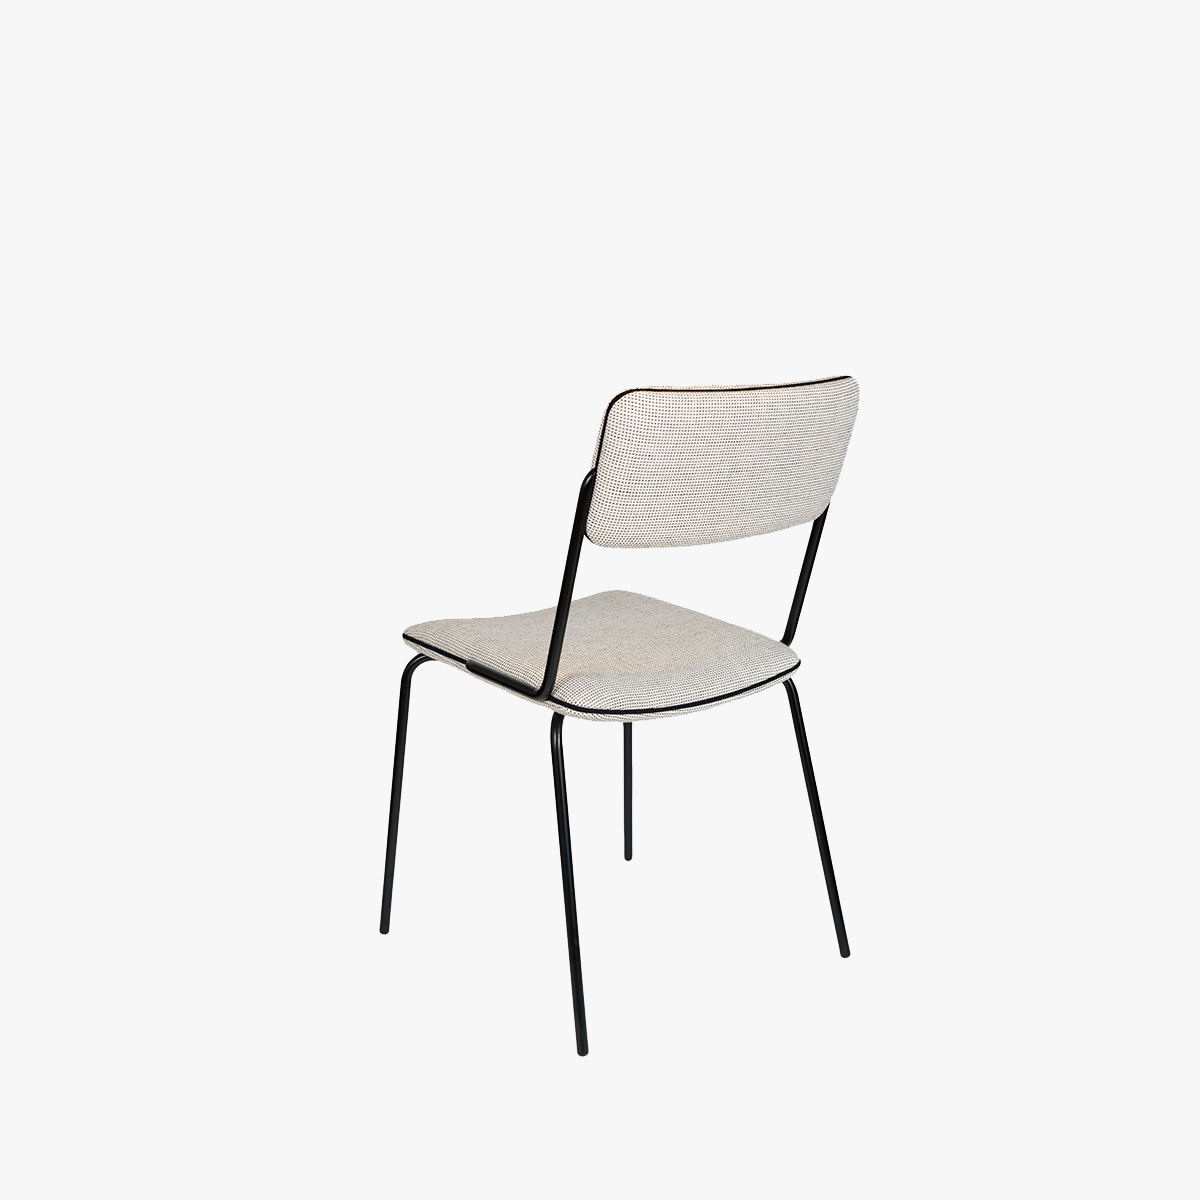 Chair Double Jeu, Dandy - H85 x W51 x D43 cm - Dandy tissue / Steel - image 4